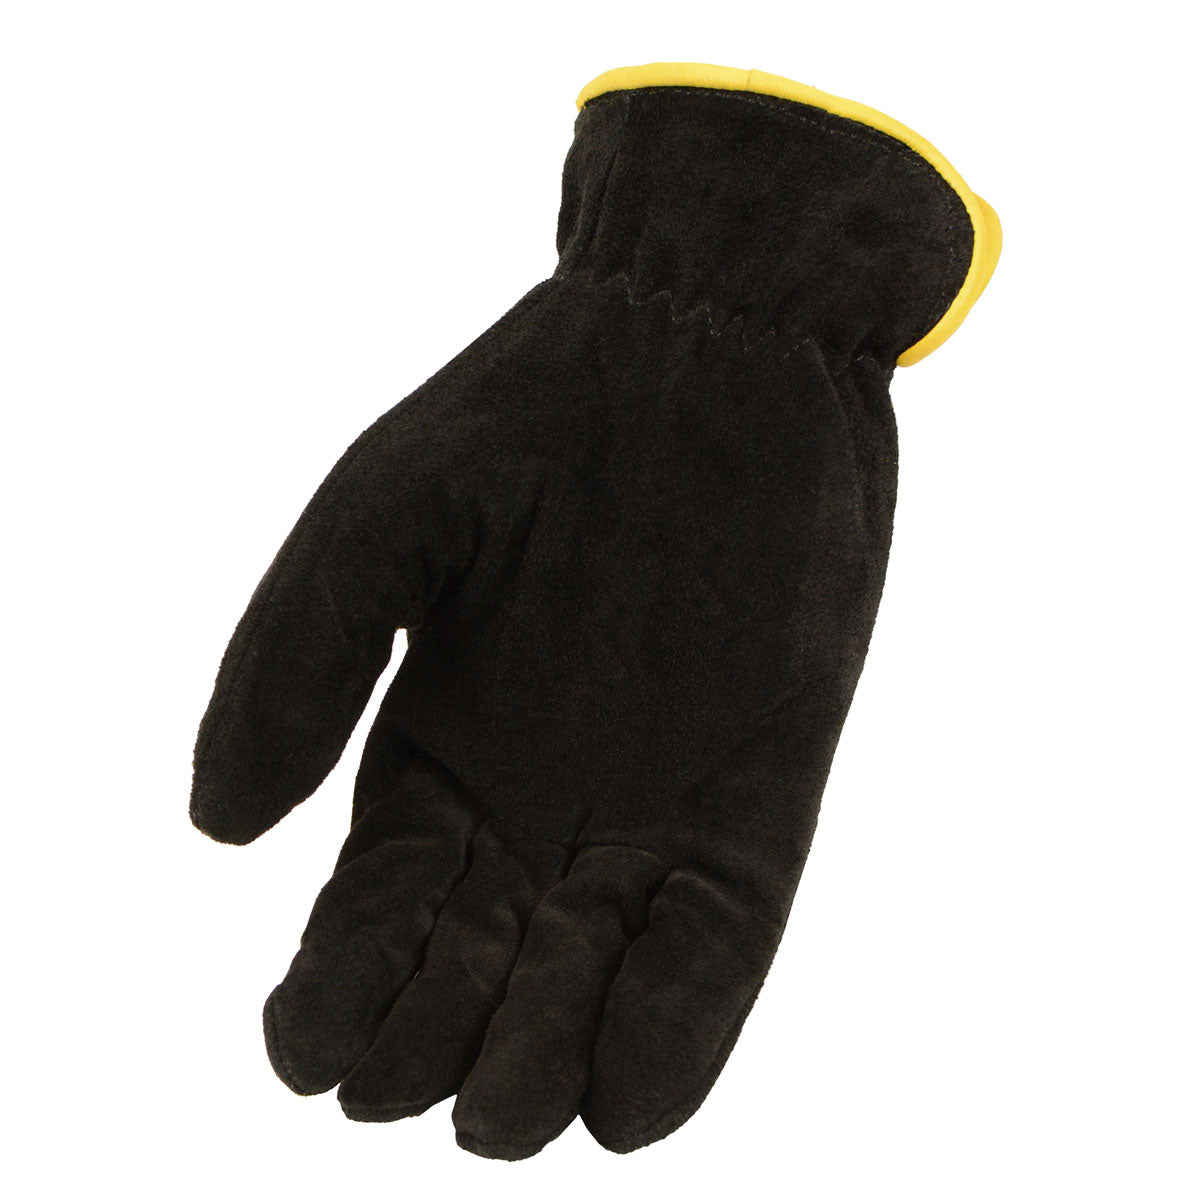 M Boss Apparel BOS37558 Men's Black and Tan Leather Deer Skin Gloves